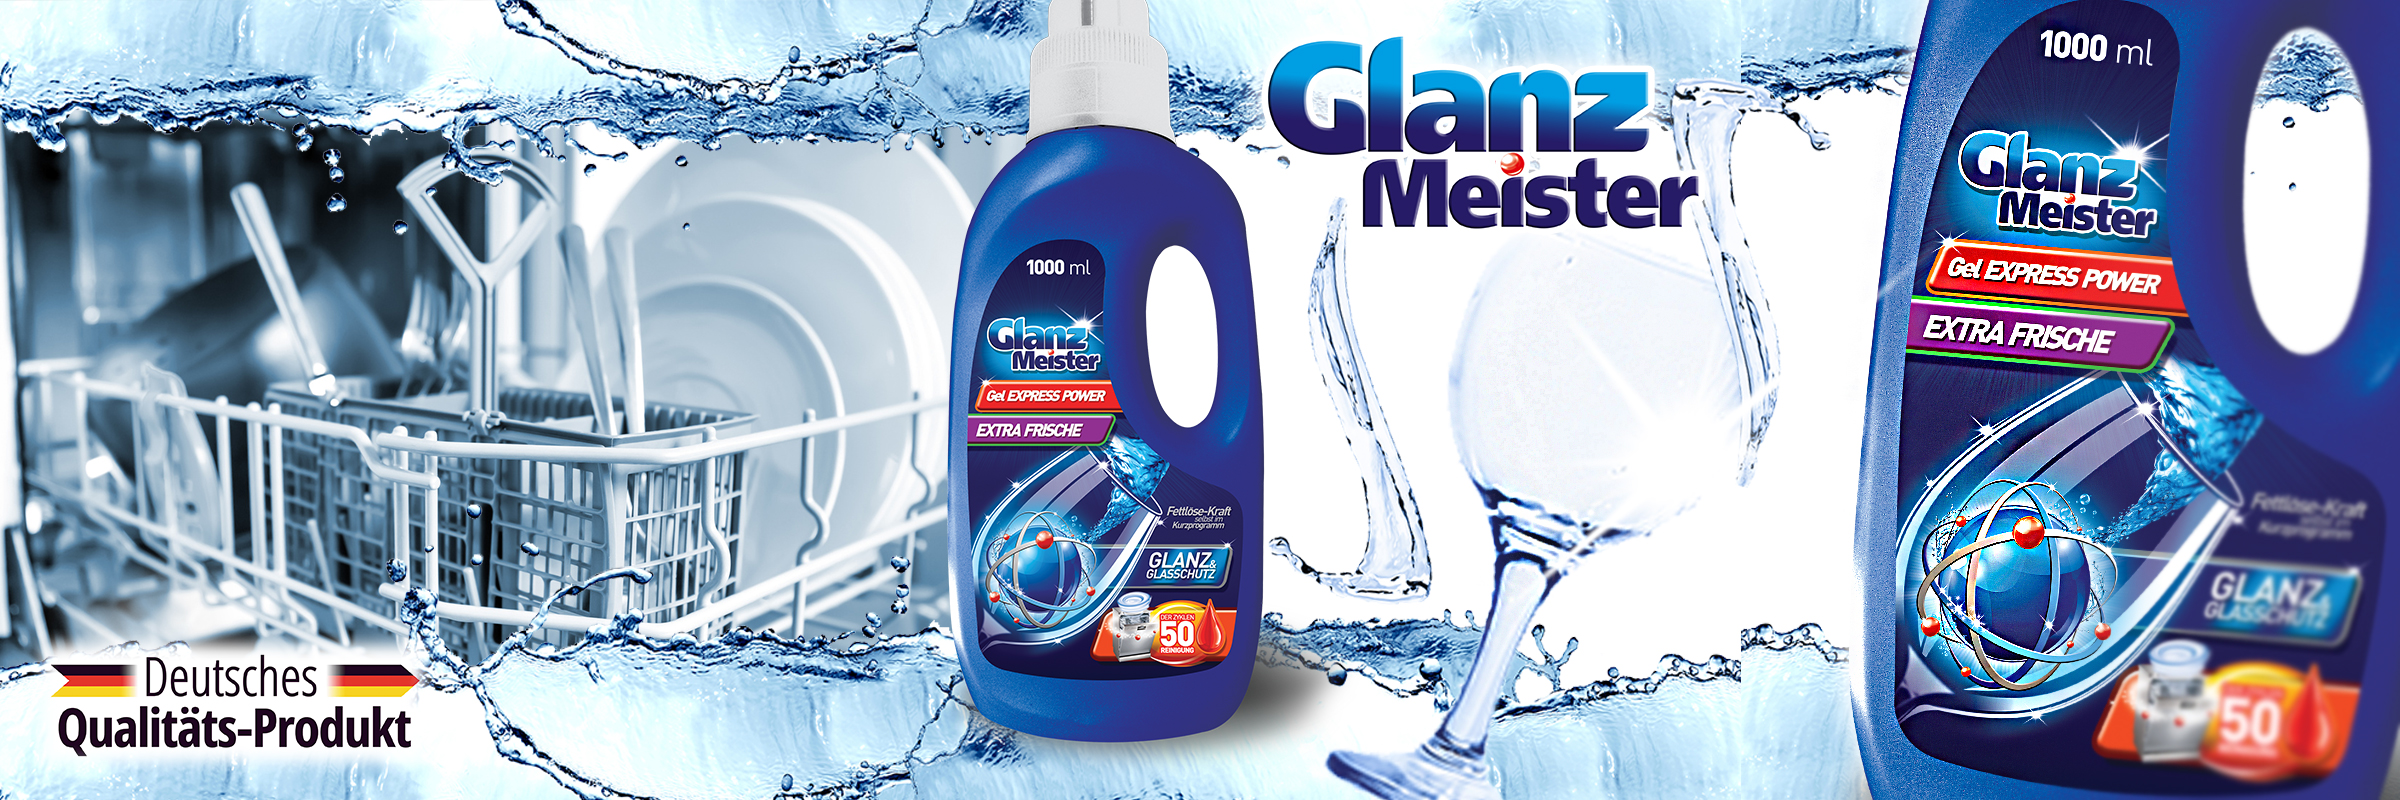 New product - GlanzMeister dishwasher gel